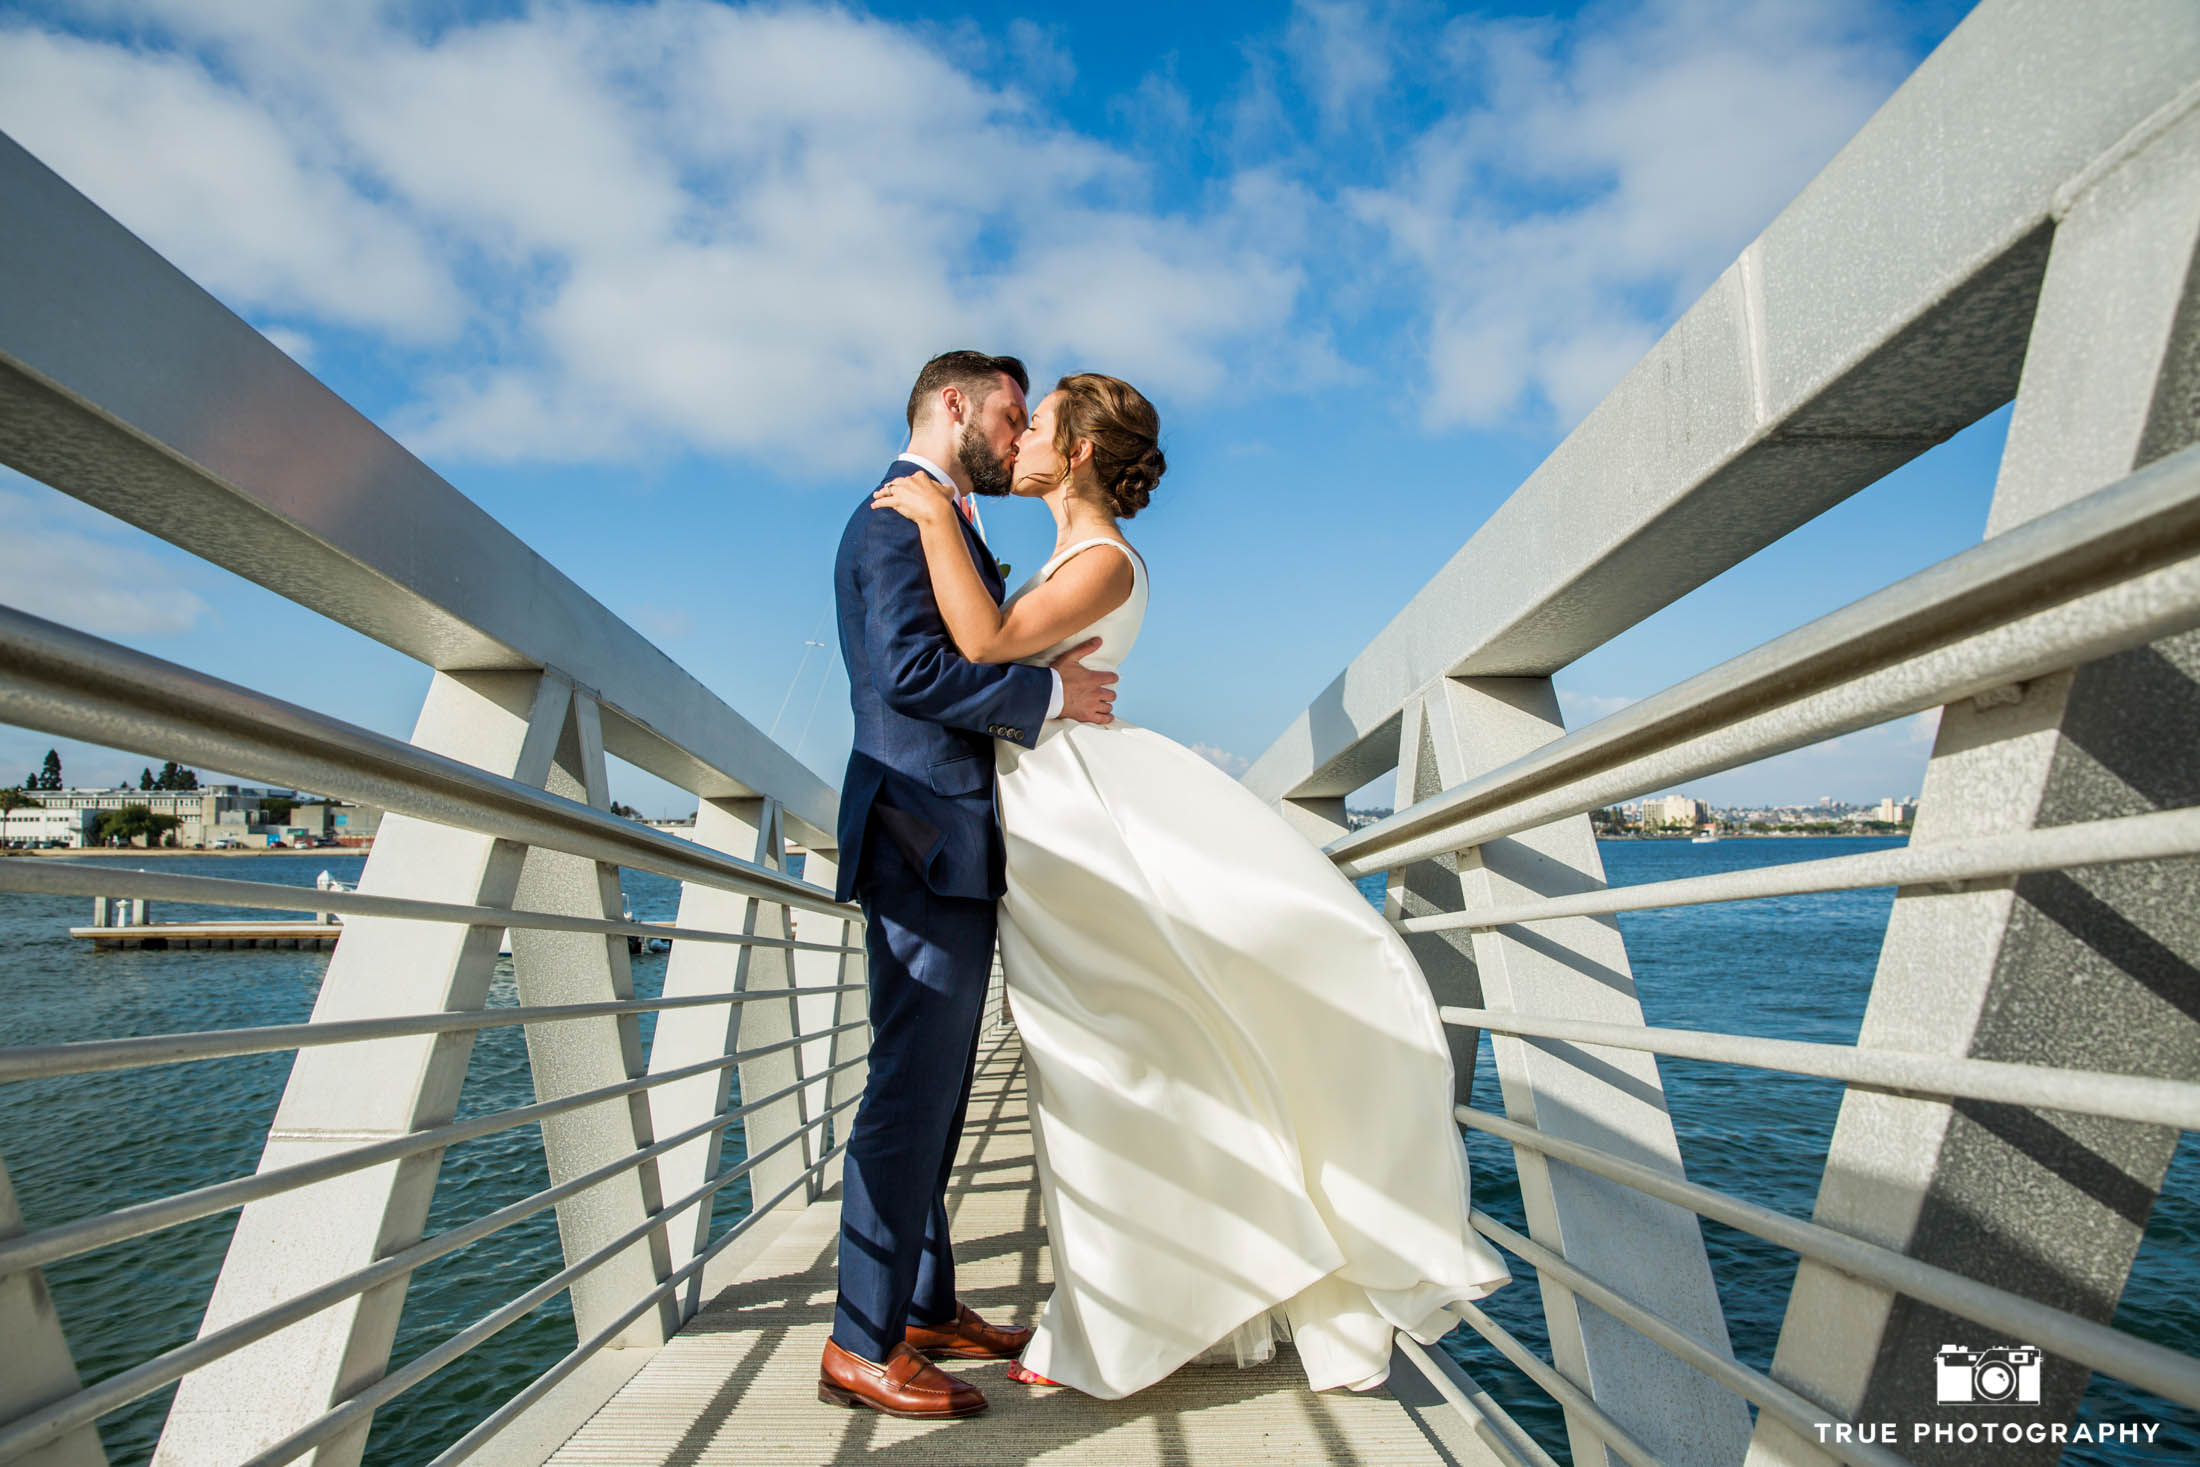 Wedding kiss on a dock